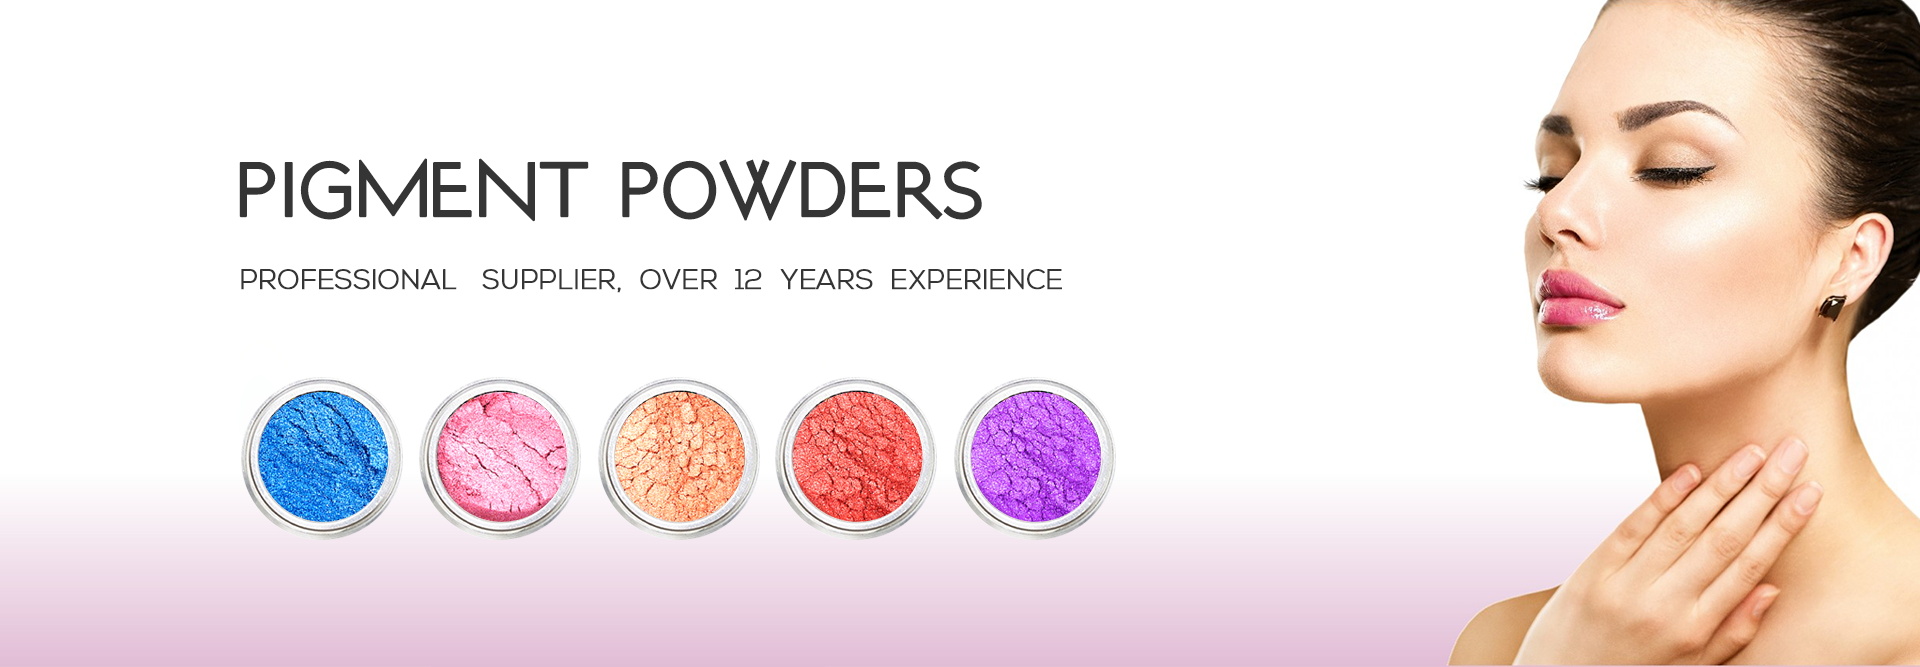 mica powders banner1